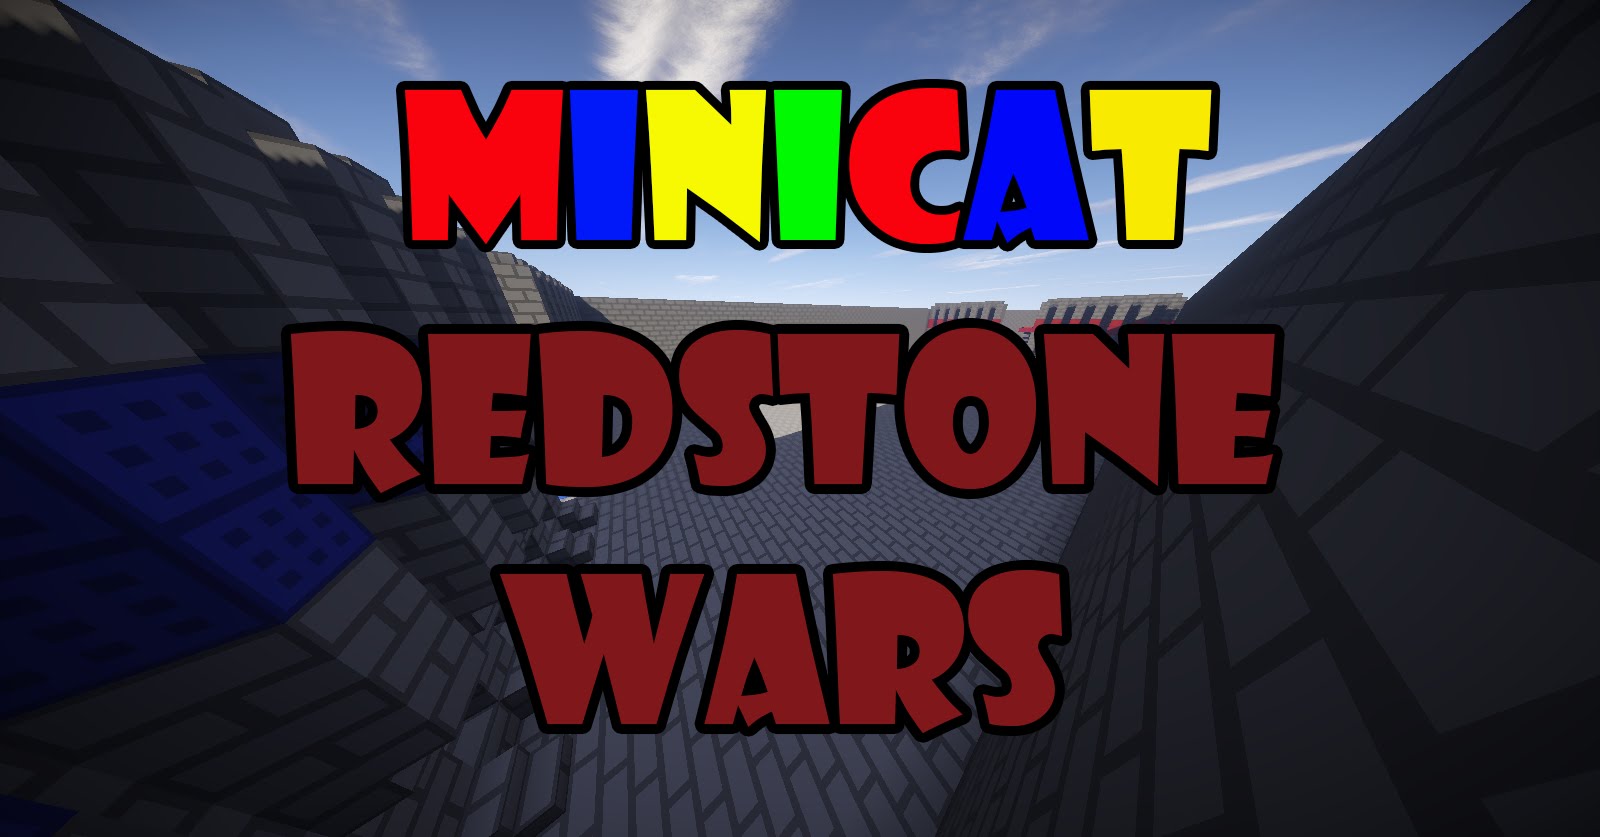 MiniCat - Partidaca a RedstoneWars! de Família Caricú